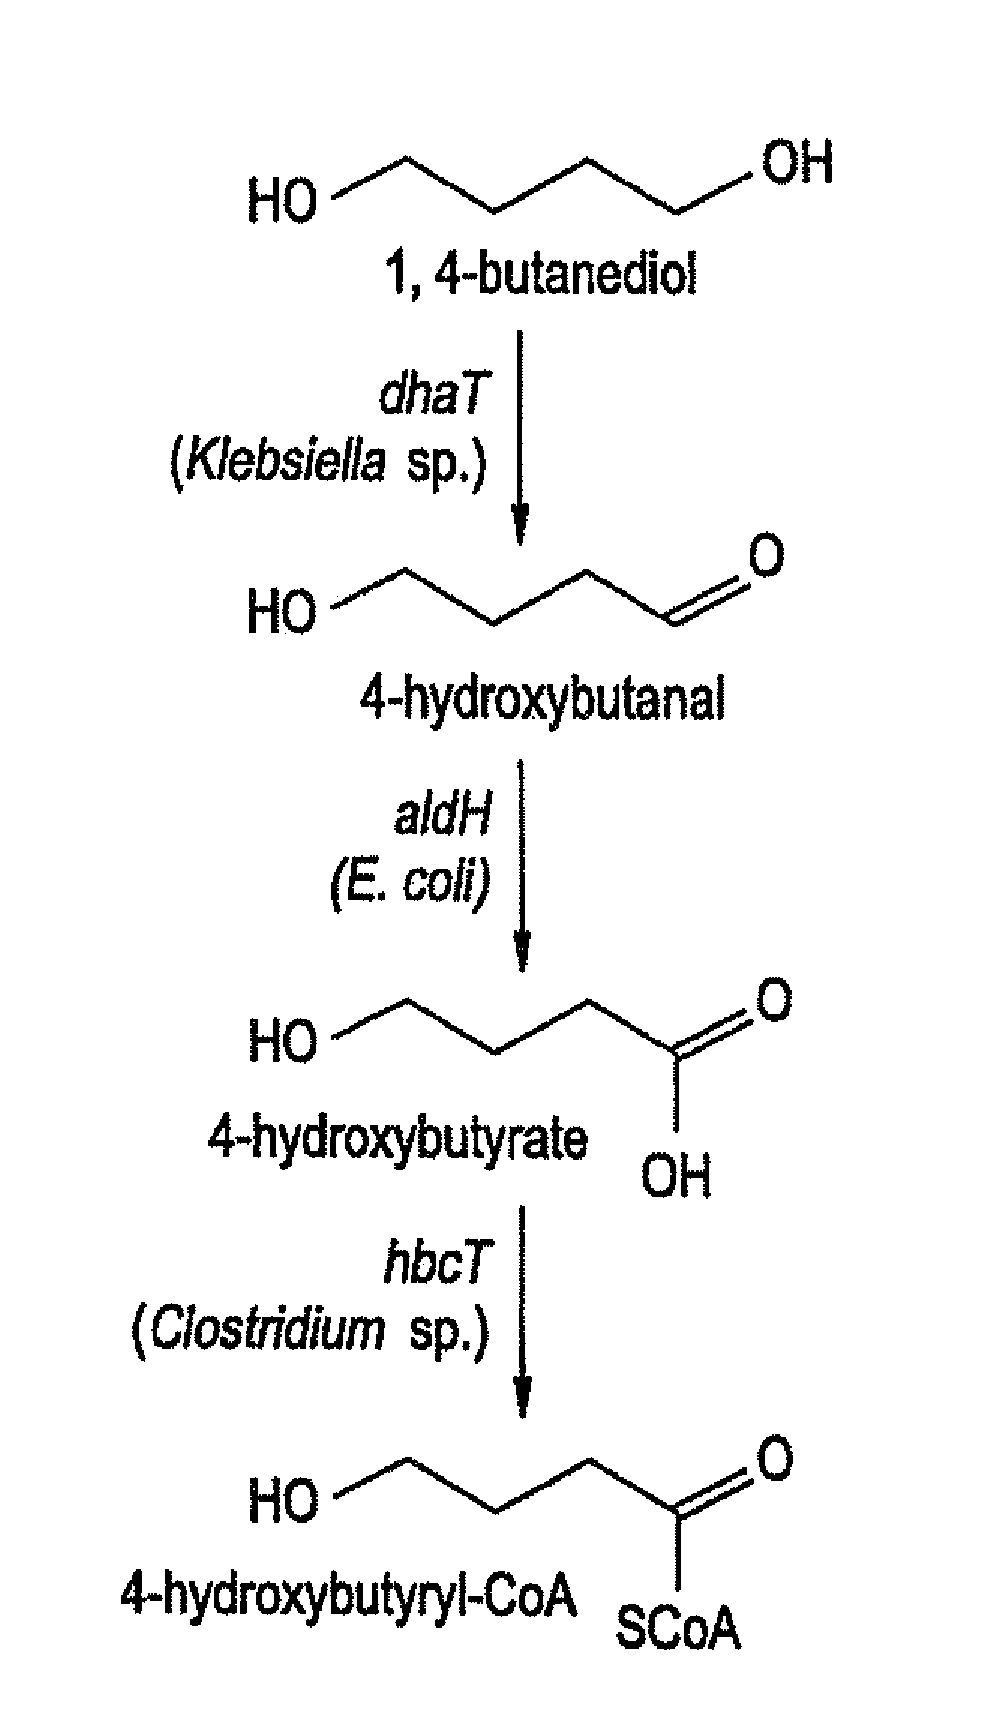 Production of polyhydroxyalkanoates from polyols